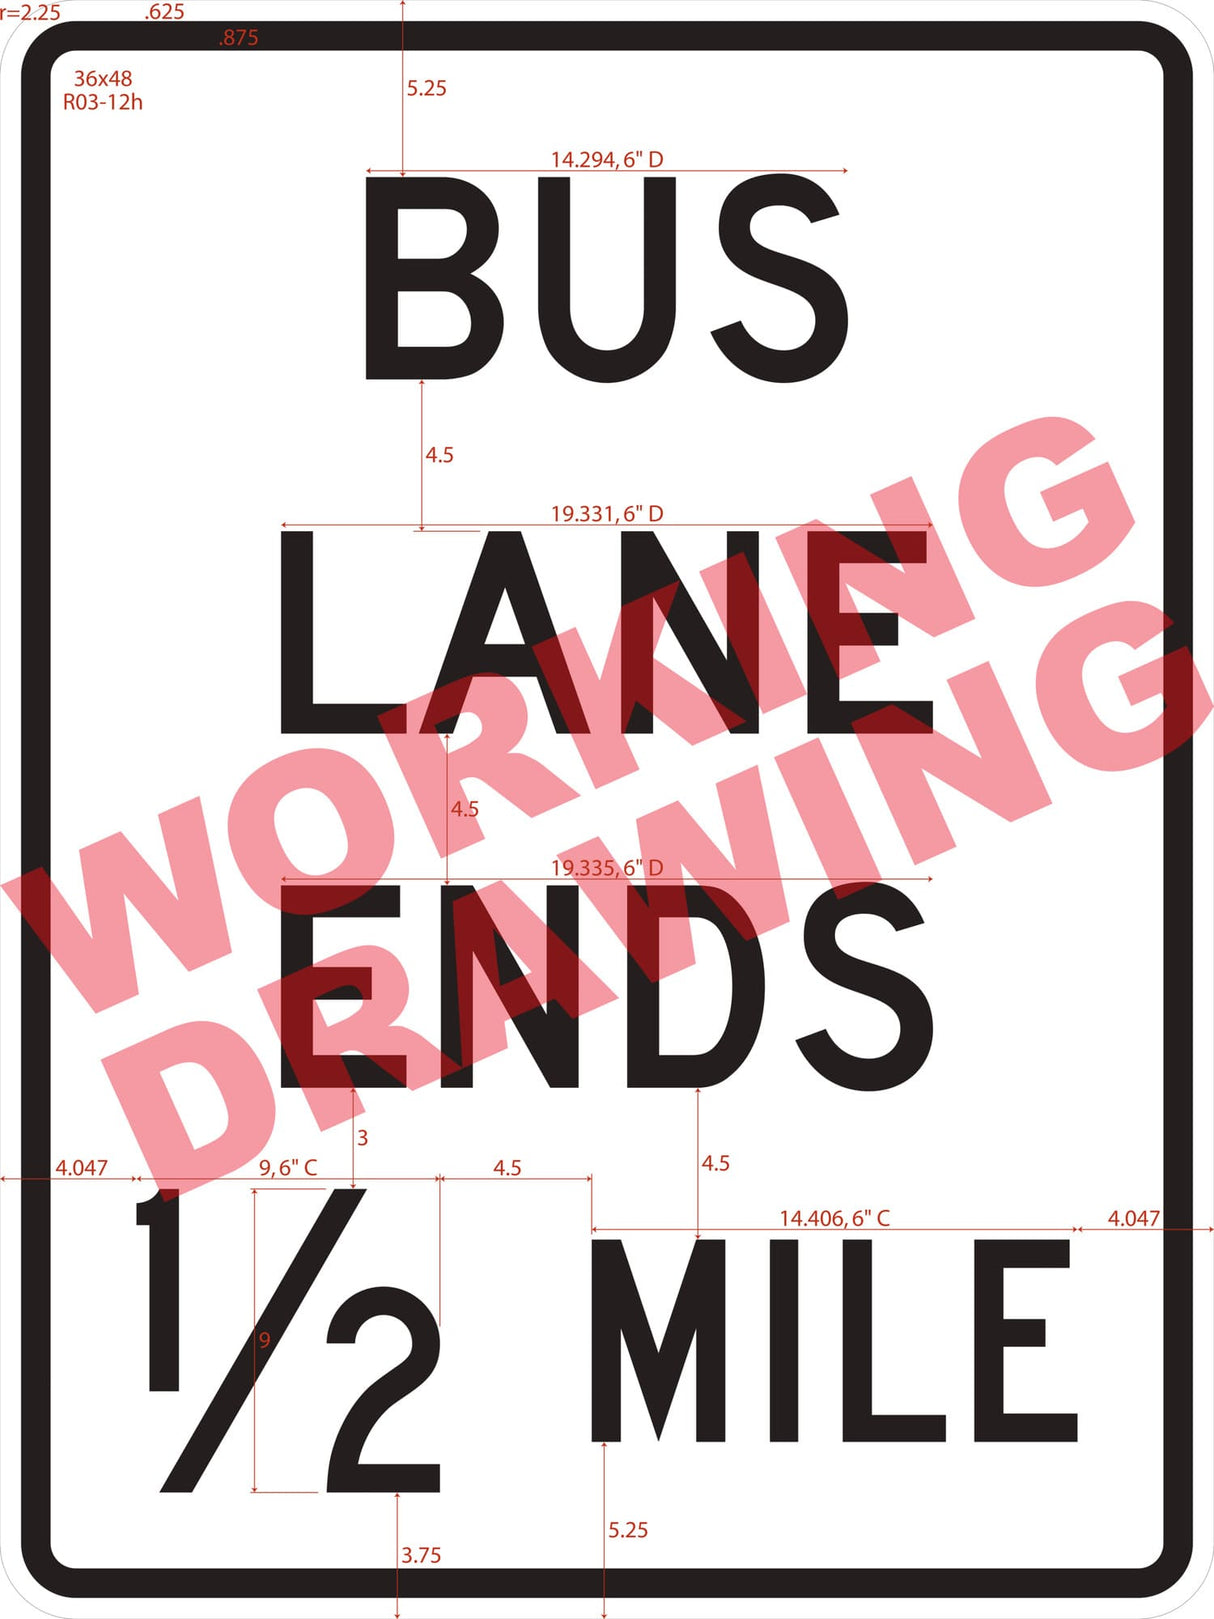 Bus Lane Ends X Mile (Post-Mounted)(R03-12H)